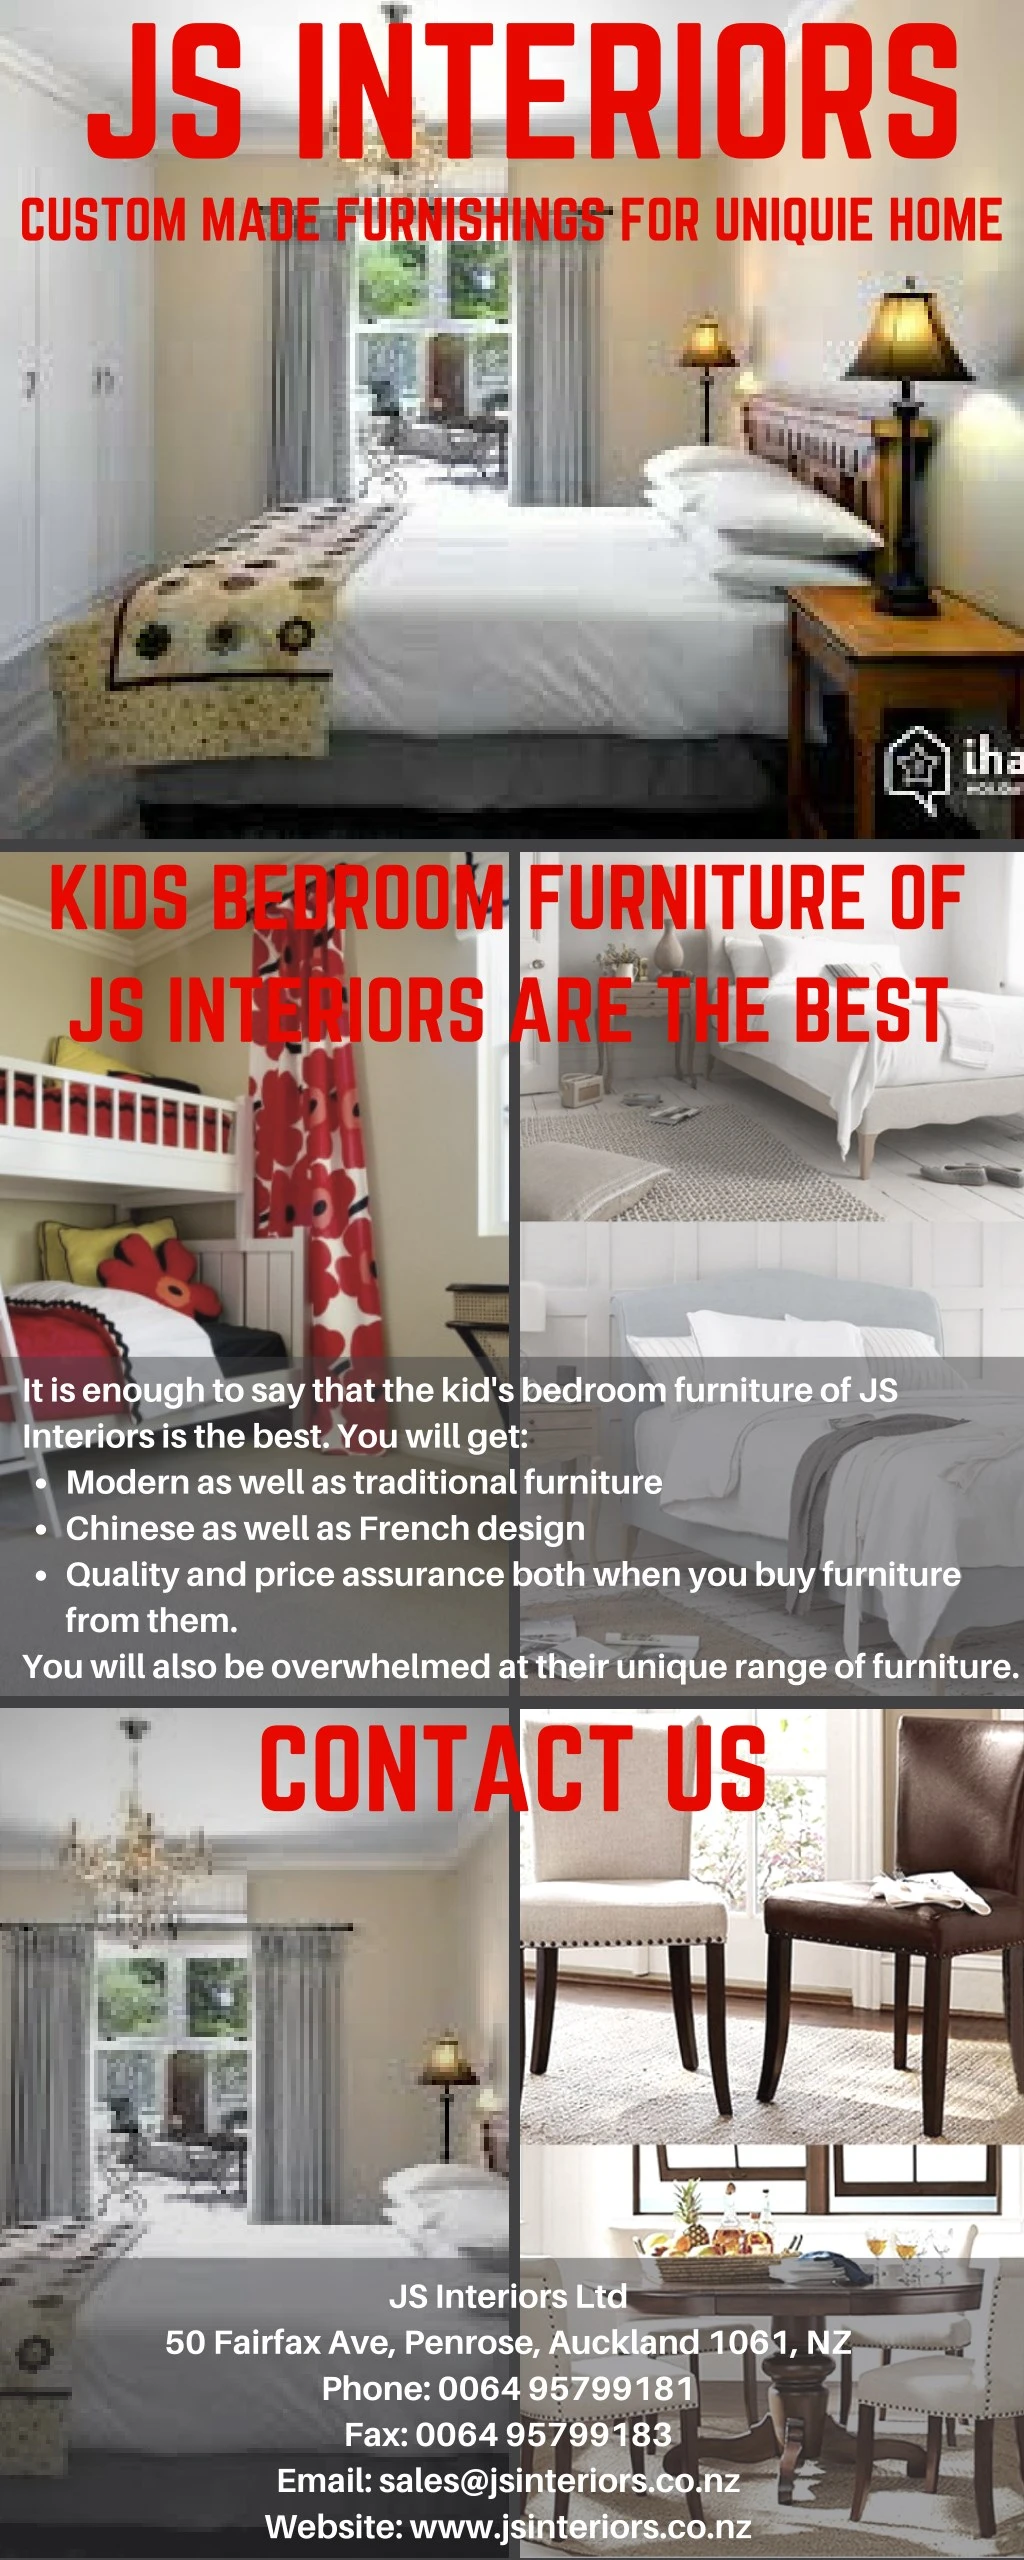 js interiors custom made furnishings for uniquie